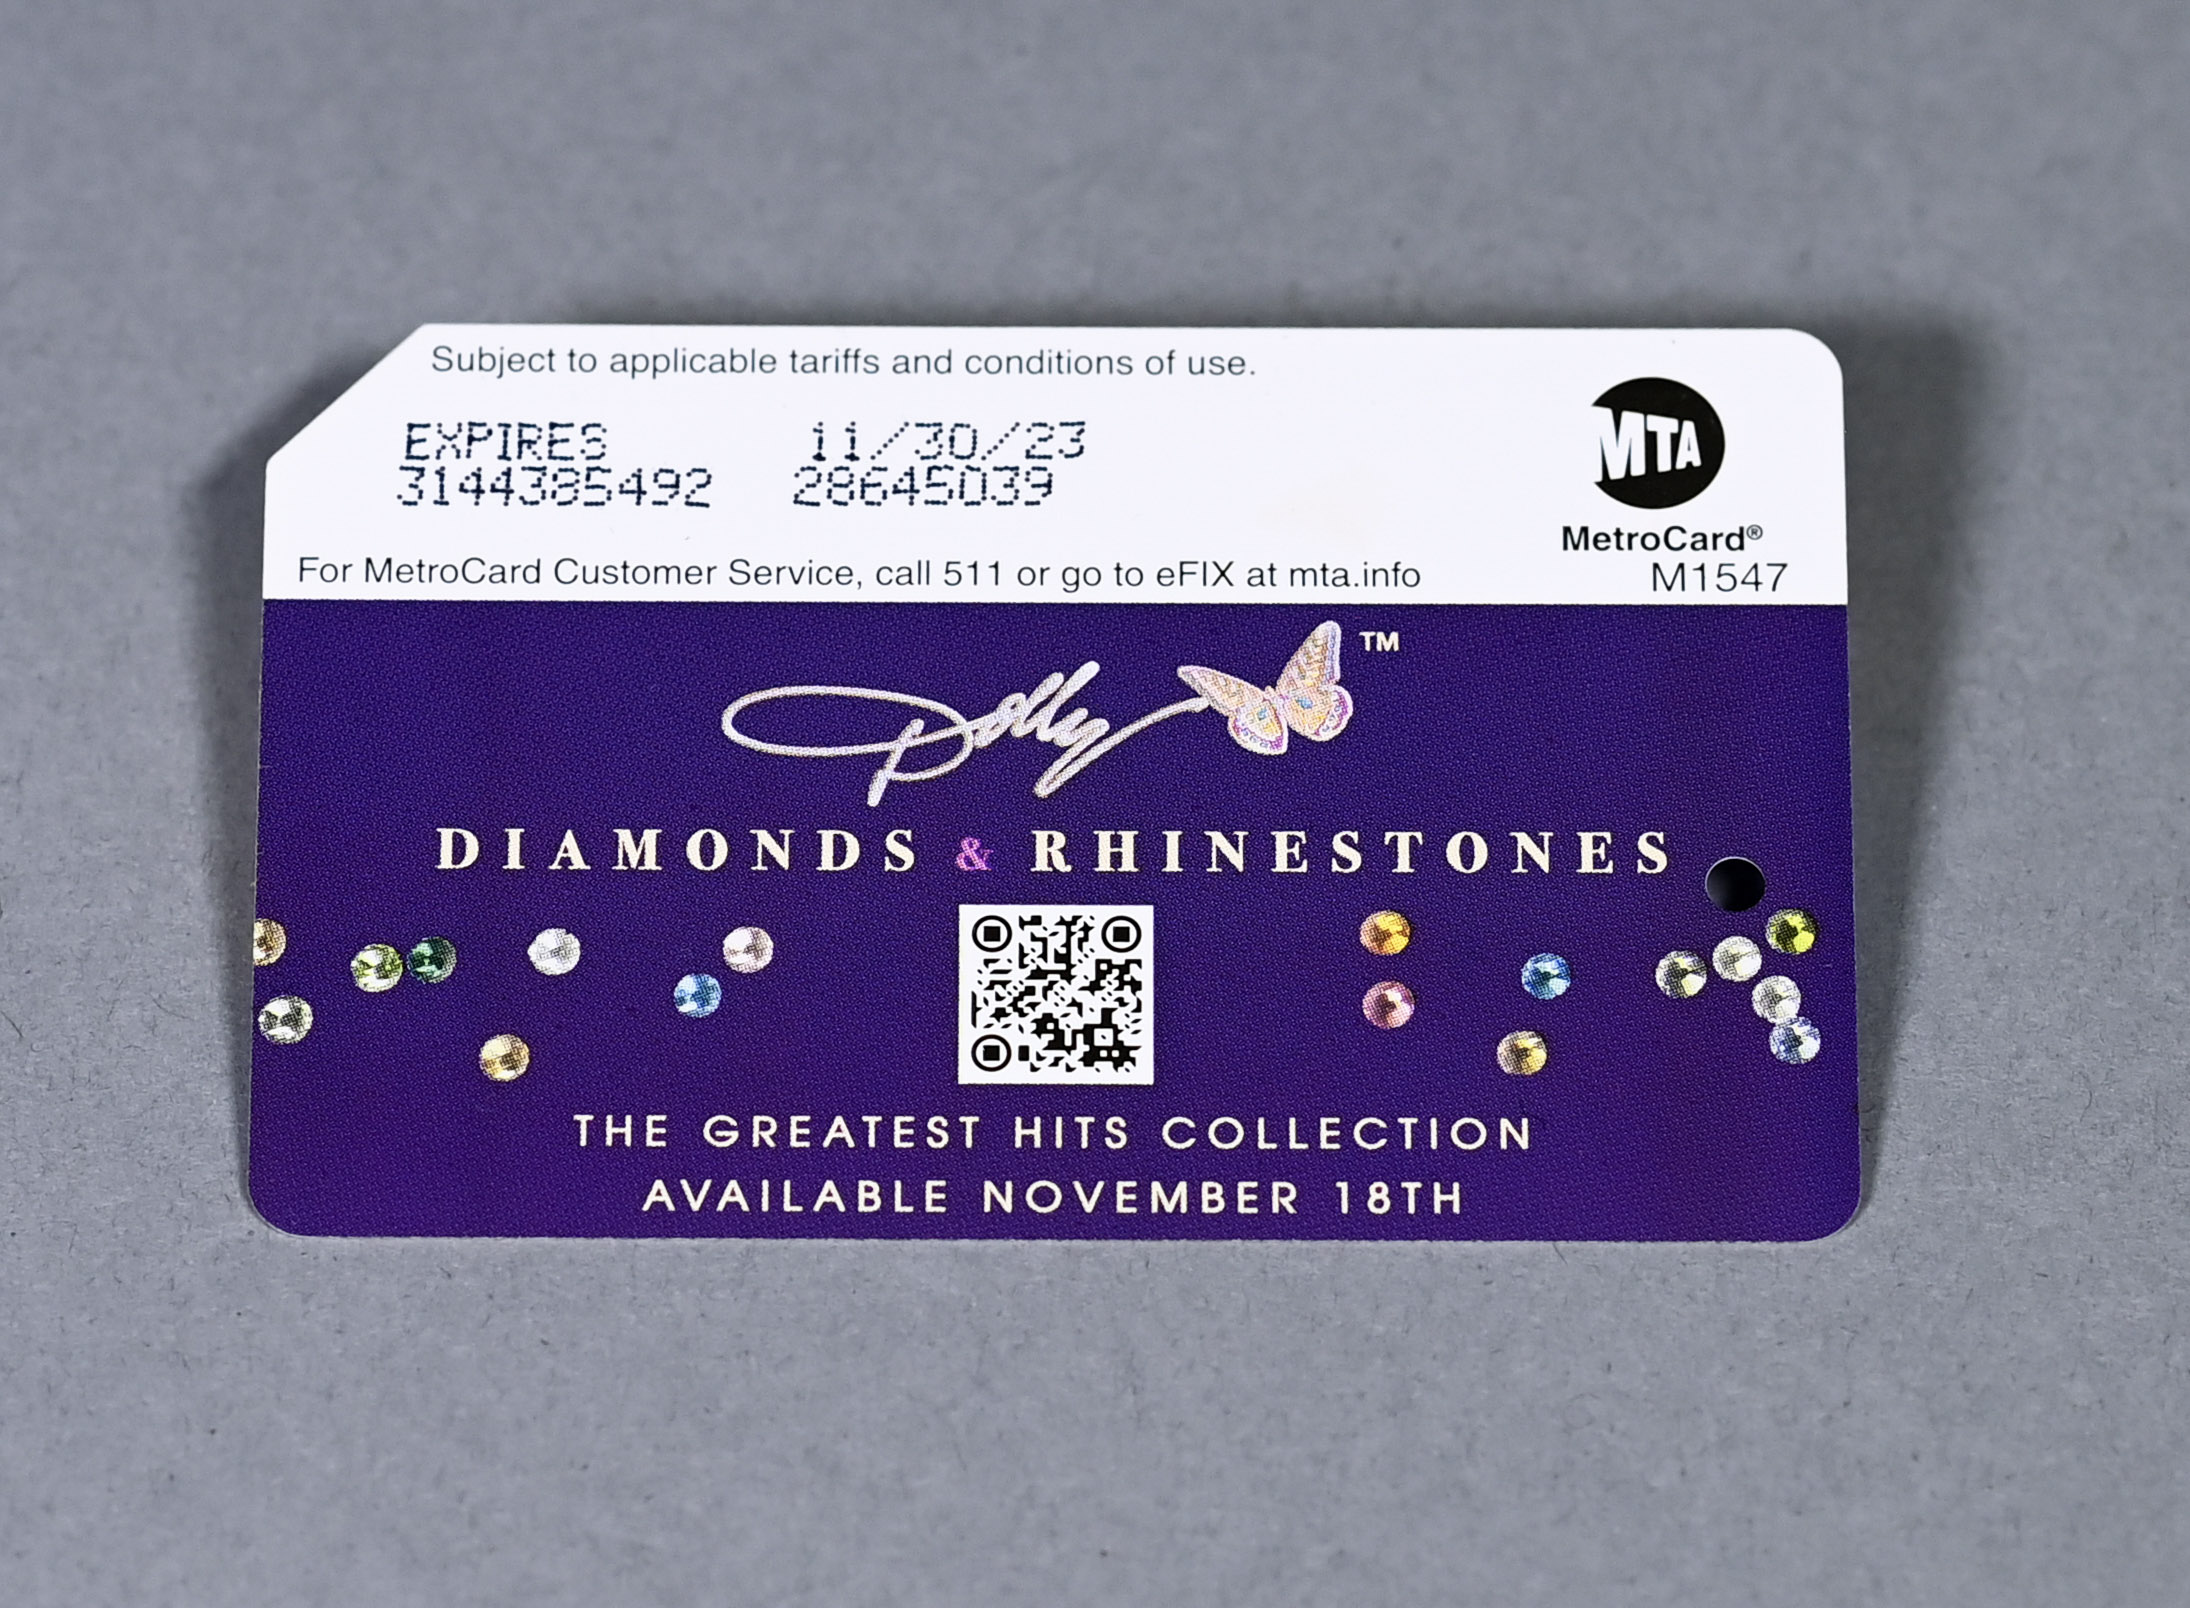 Dolly Parton “Diamonds and Rhinestones” commemorative MetroCard.